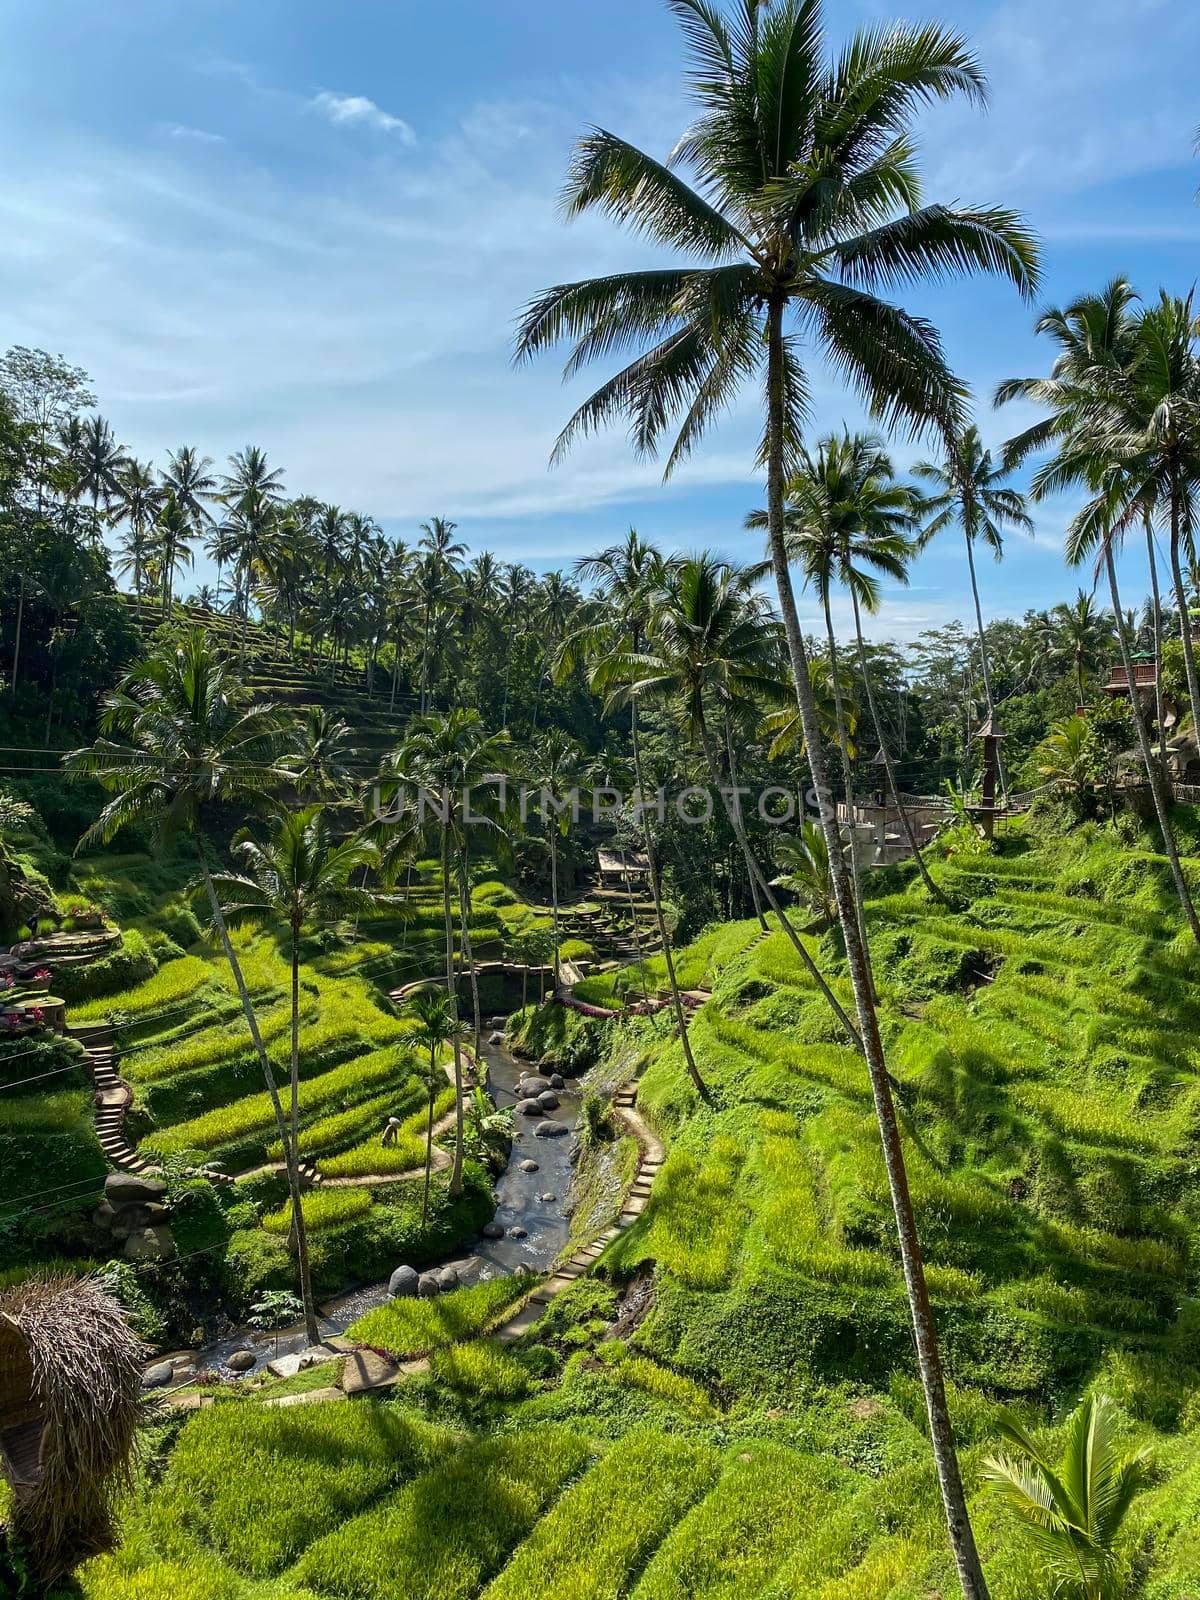 Tegallalang Rice Terraces, Bali, Indonesia - stock photo by kaliaevaen